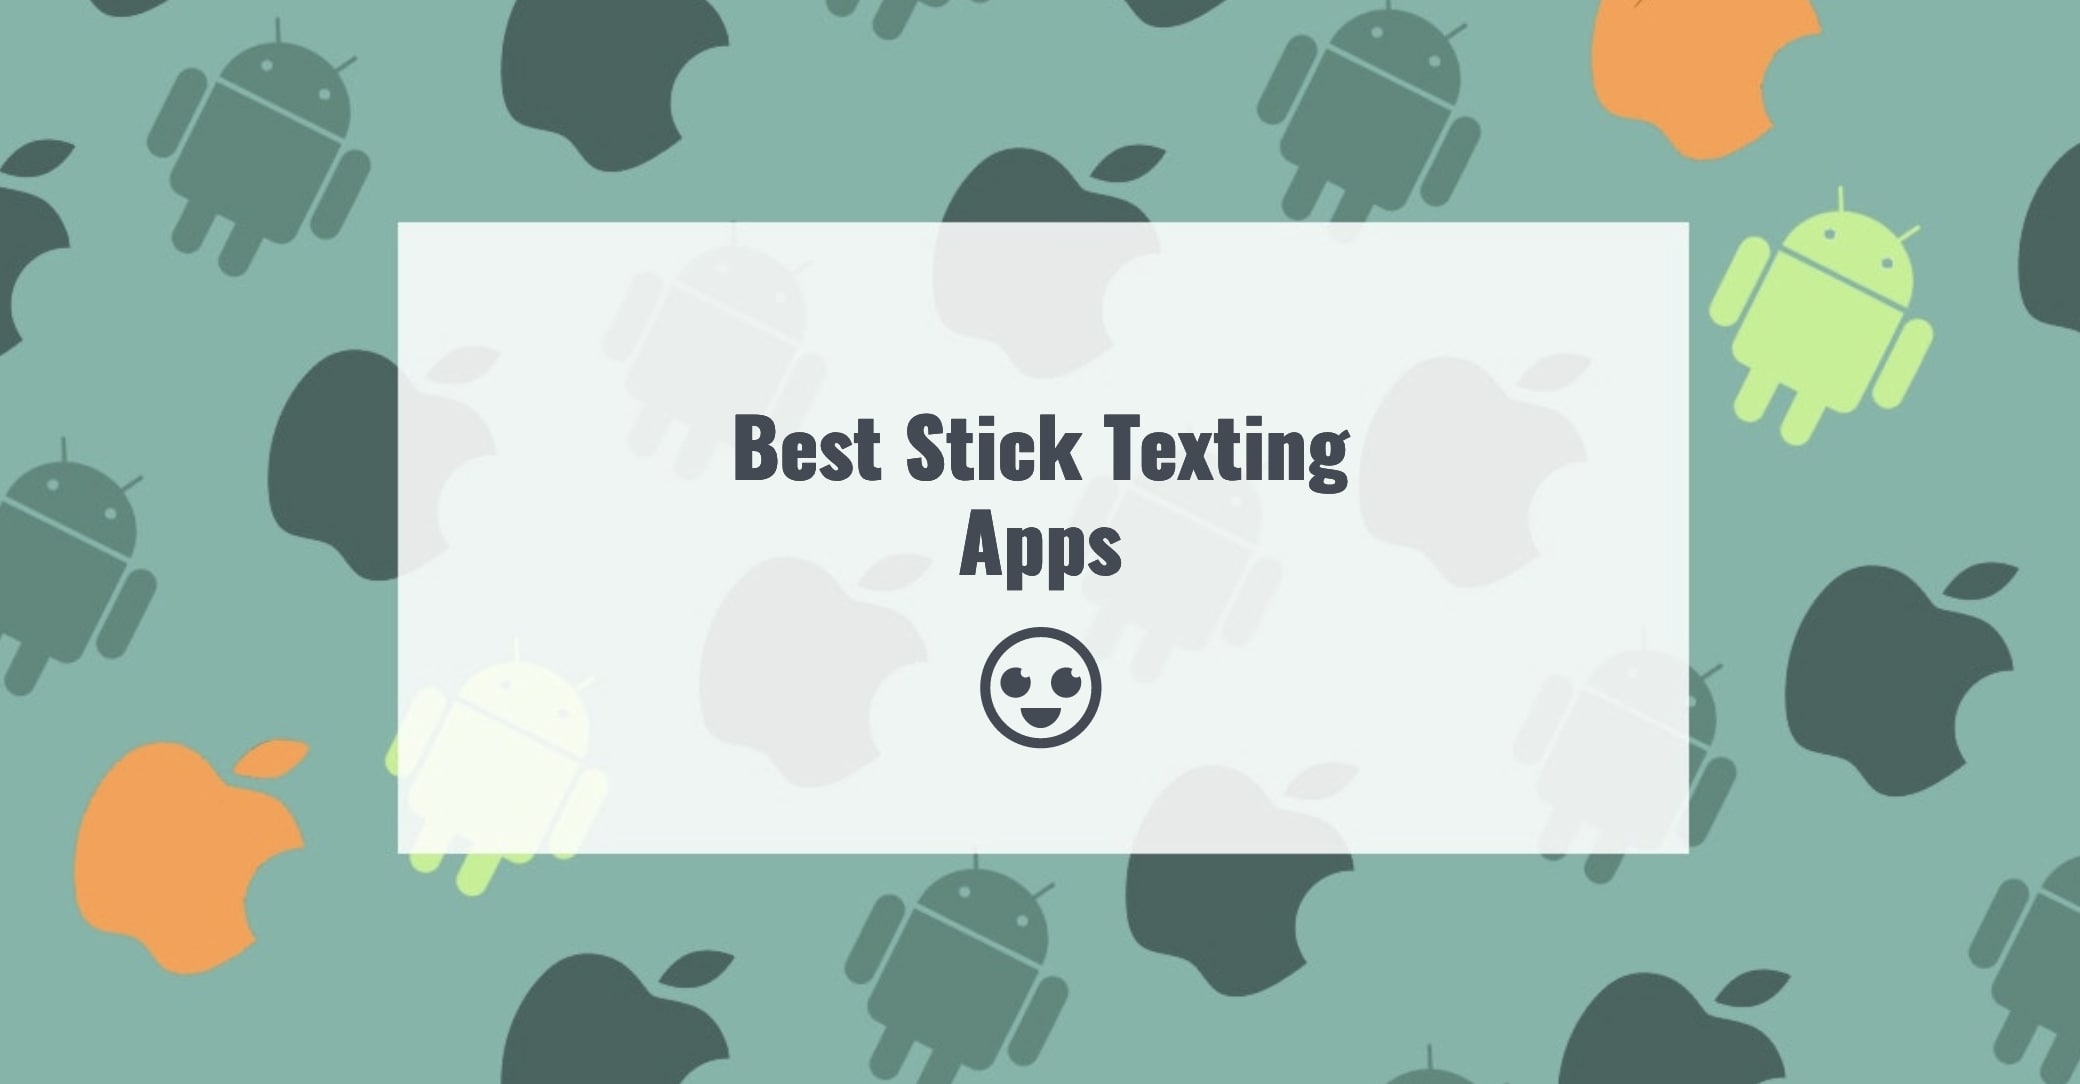 Best Stick Texting Apps